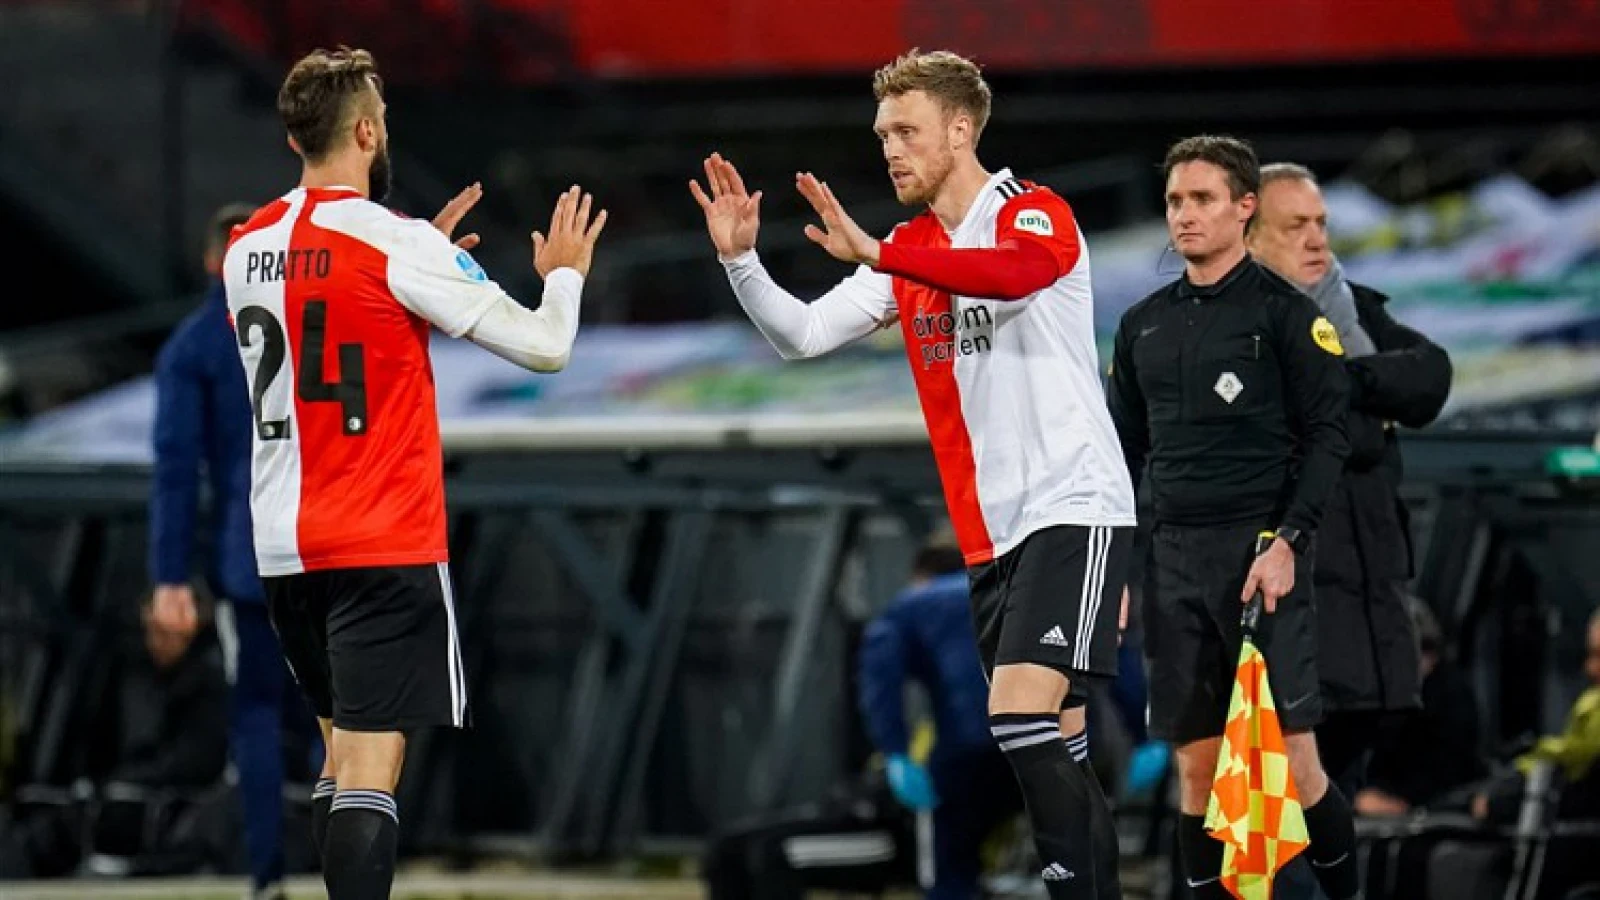 'Spits Feyenoord al min of meer afgeschreven'